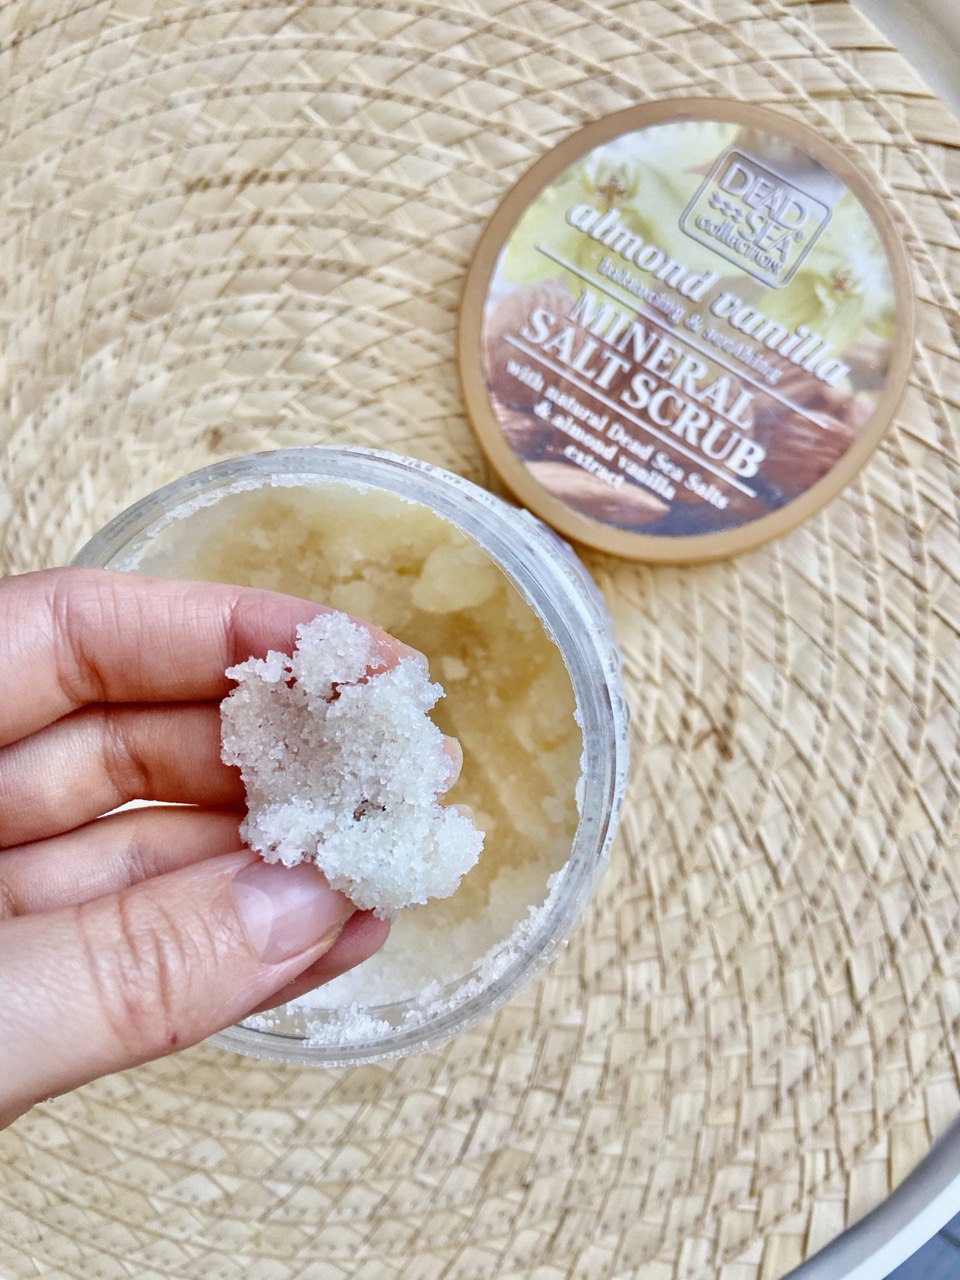 Скраб для тіла Dead Sea Collection Almond Vanilla Mineral Salt Scrub